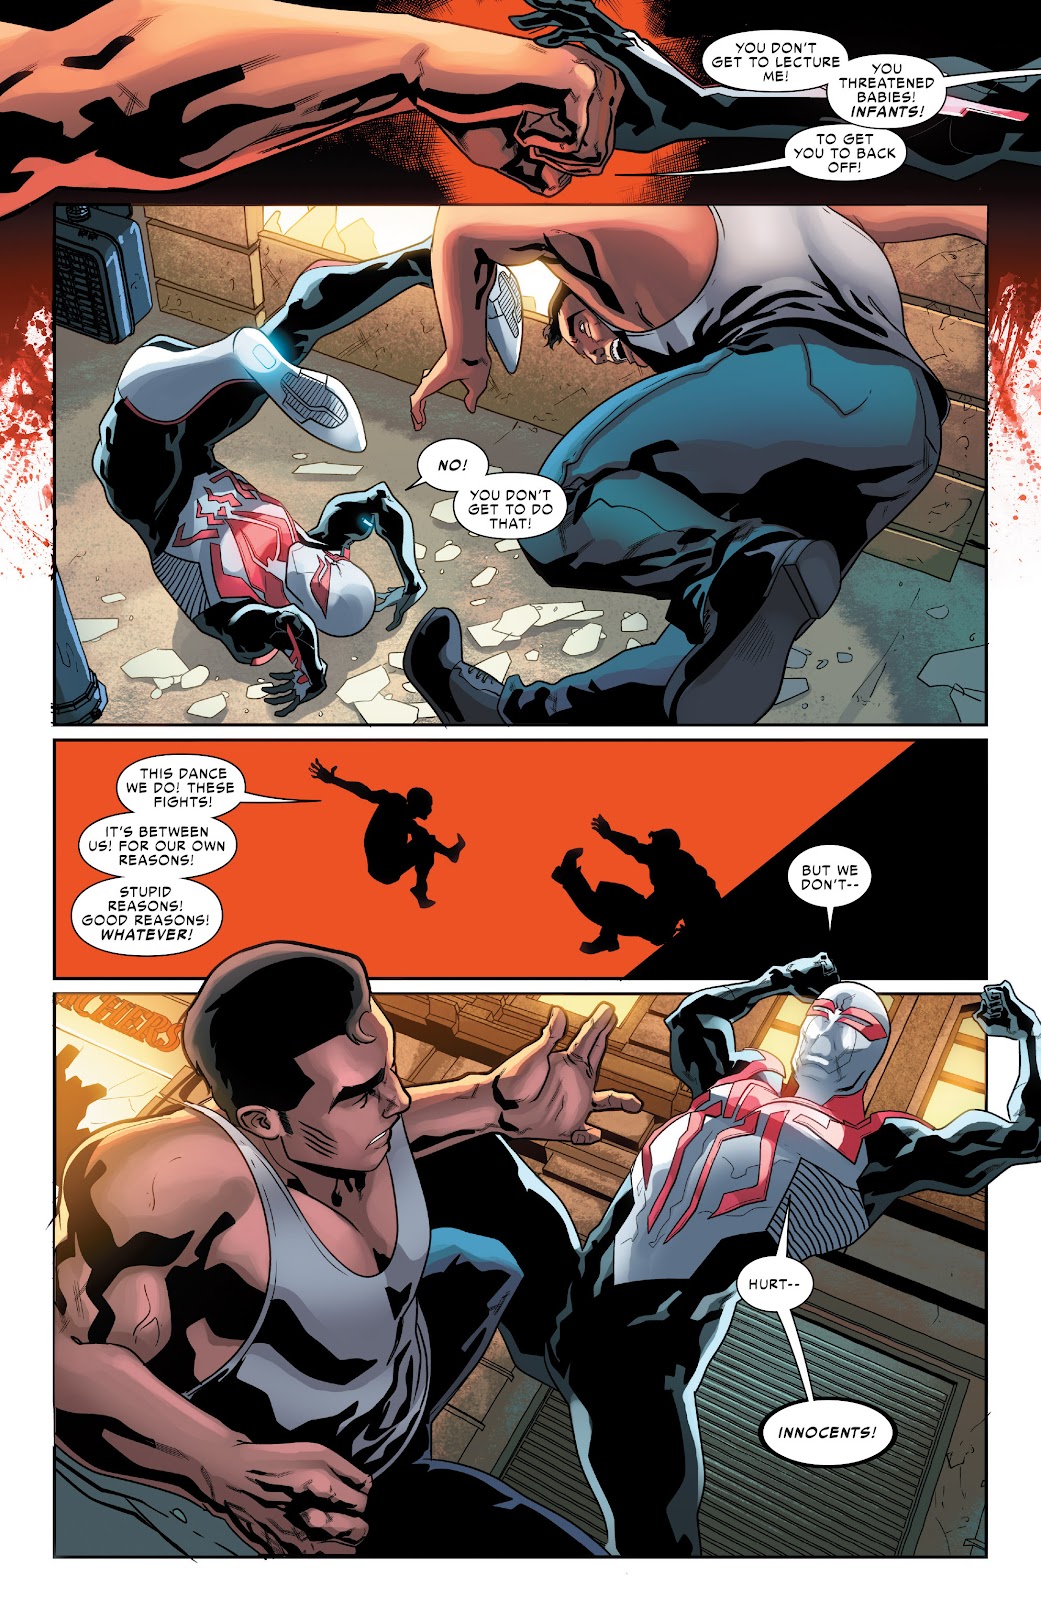 Spider-Man 2099 (2015) issue 9 - Page 11